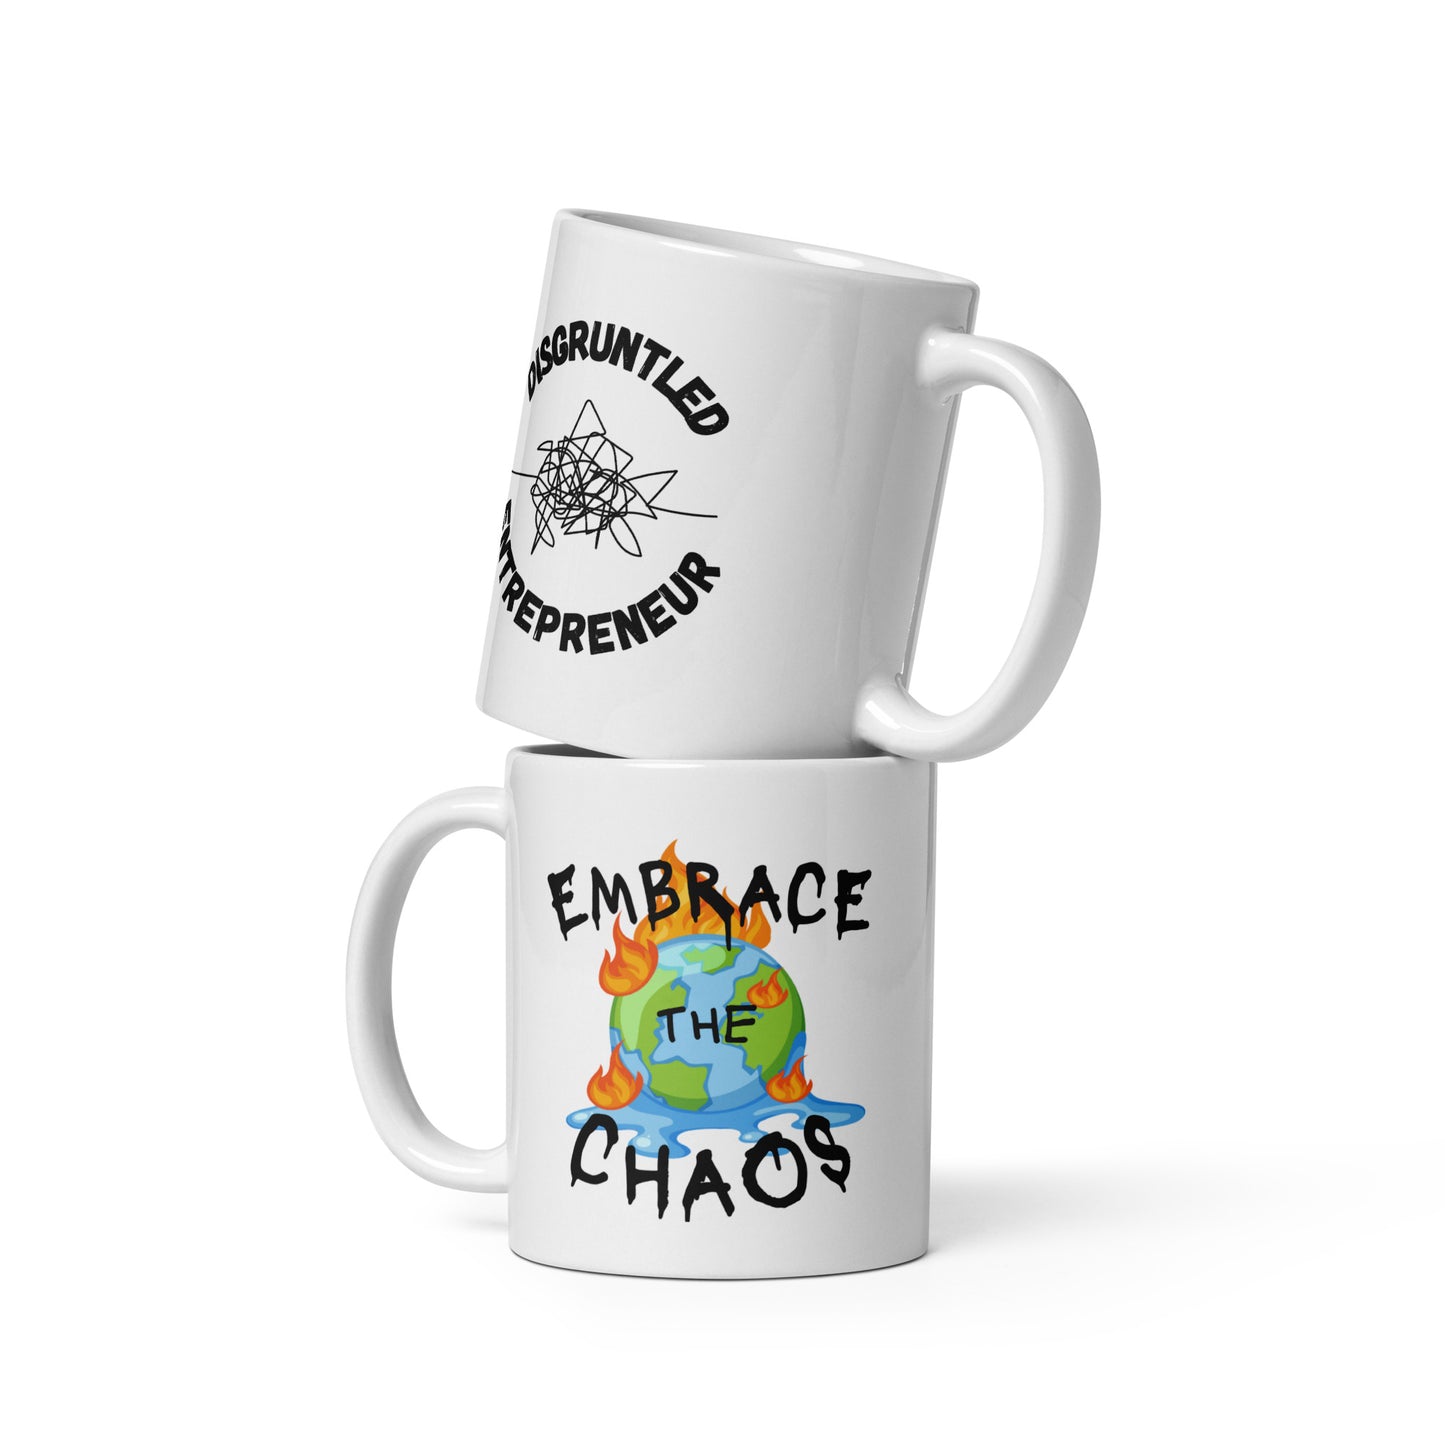 Embrace the Chaos Coffee Mug for Entrepreneurs